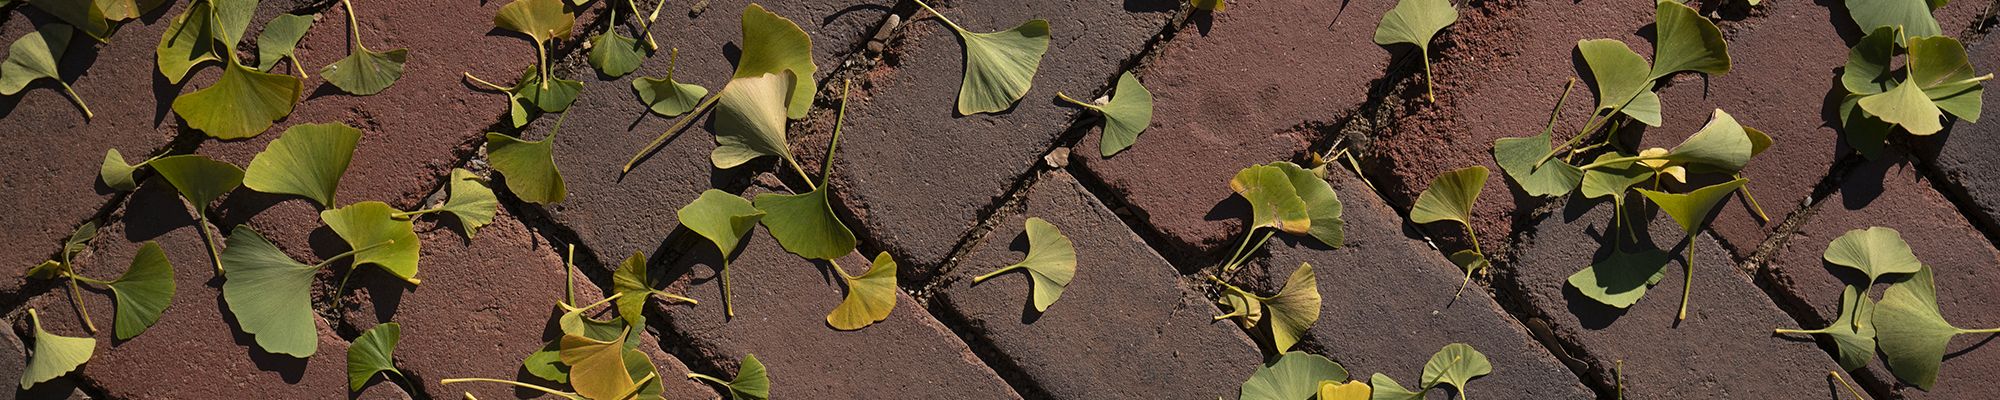 bricks with leaves on them